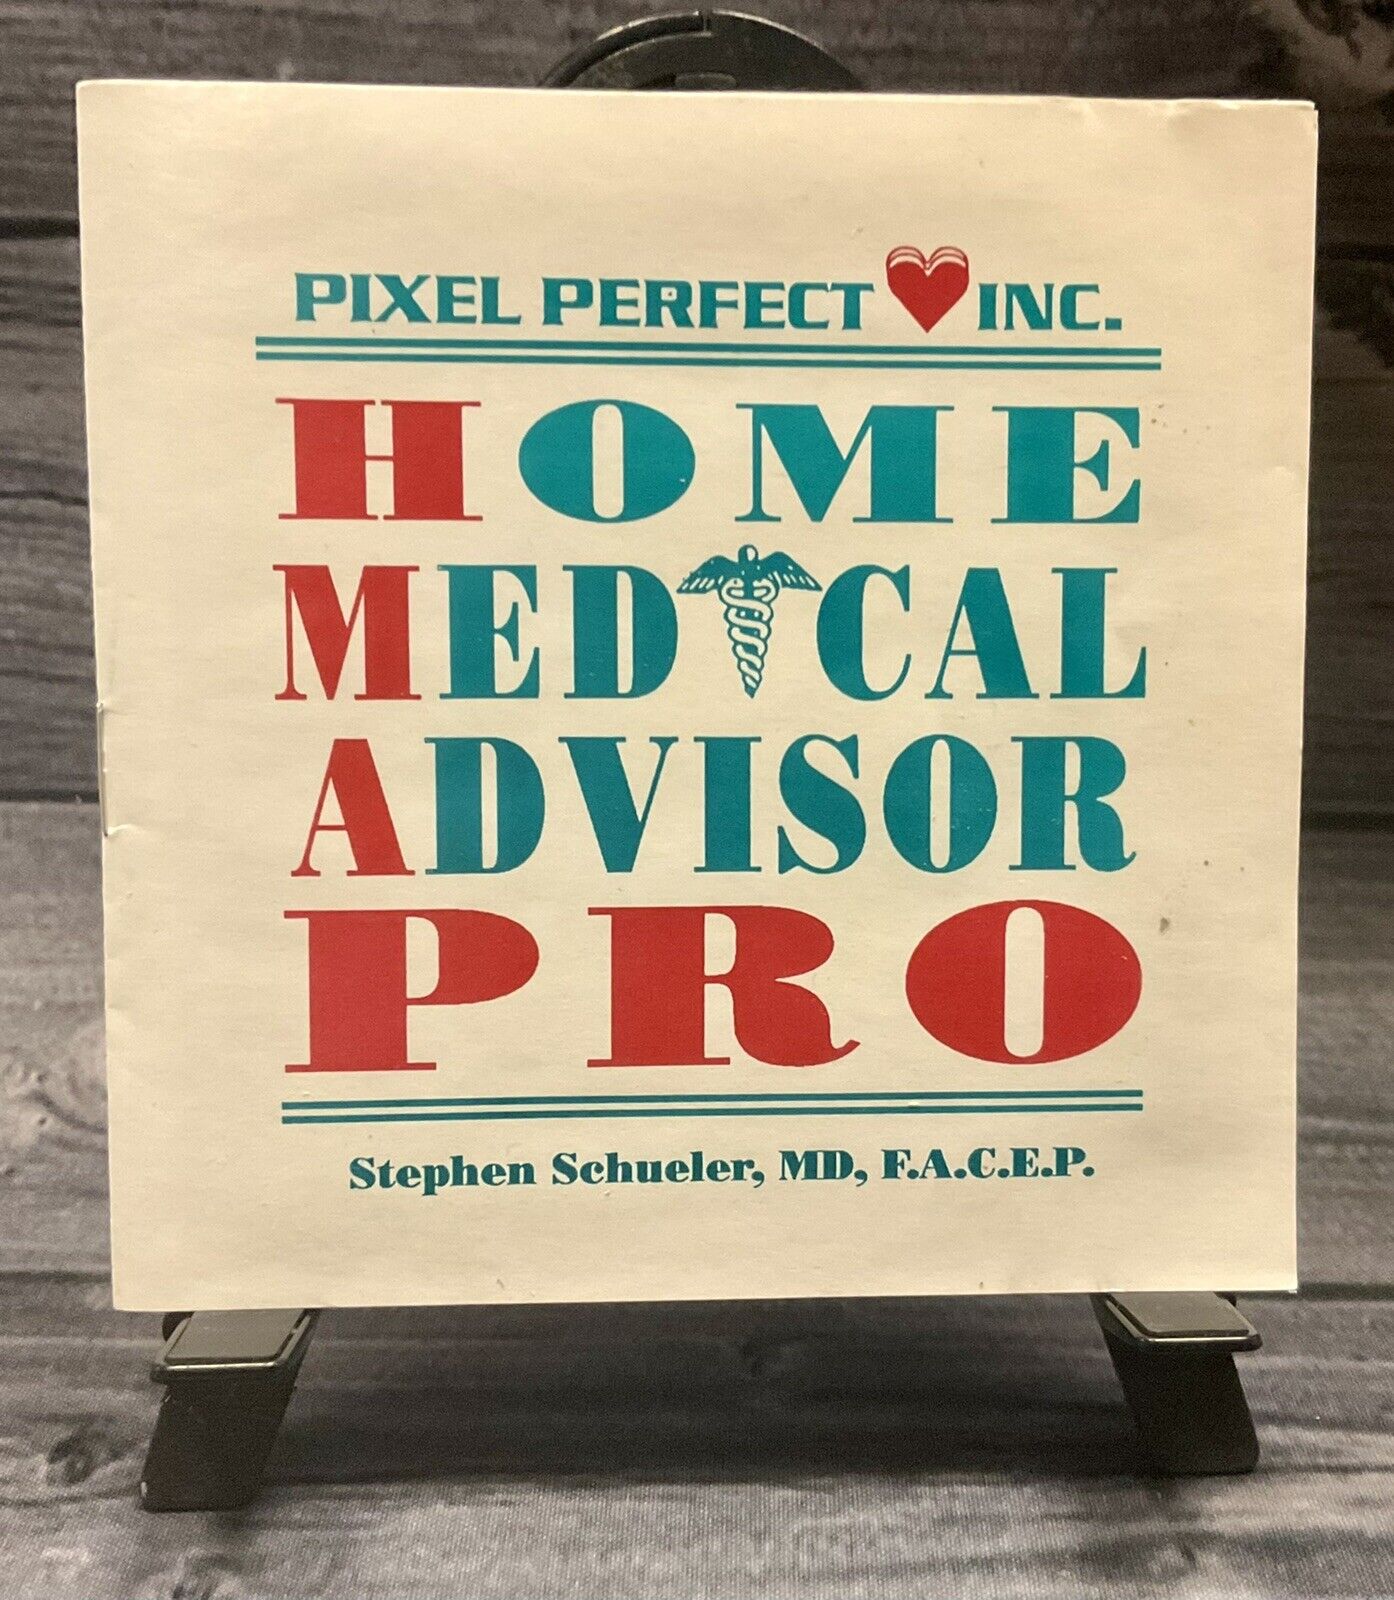 *VINTAGE* Home Medical Advisor Pro CD-ROM Windows 3.1, Pixel Perfect Inc. 1993